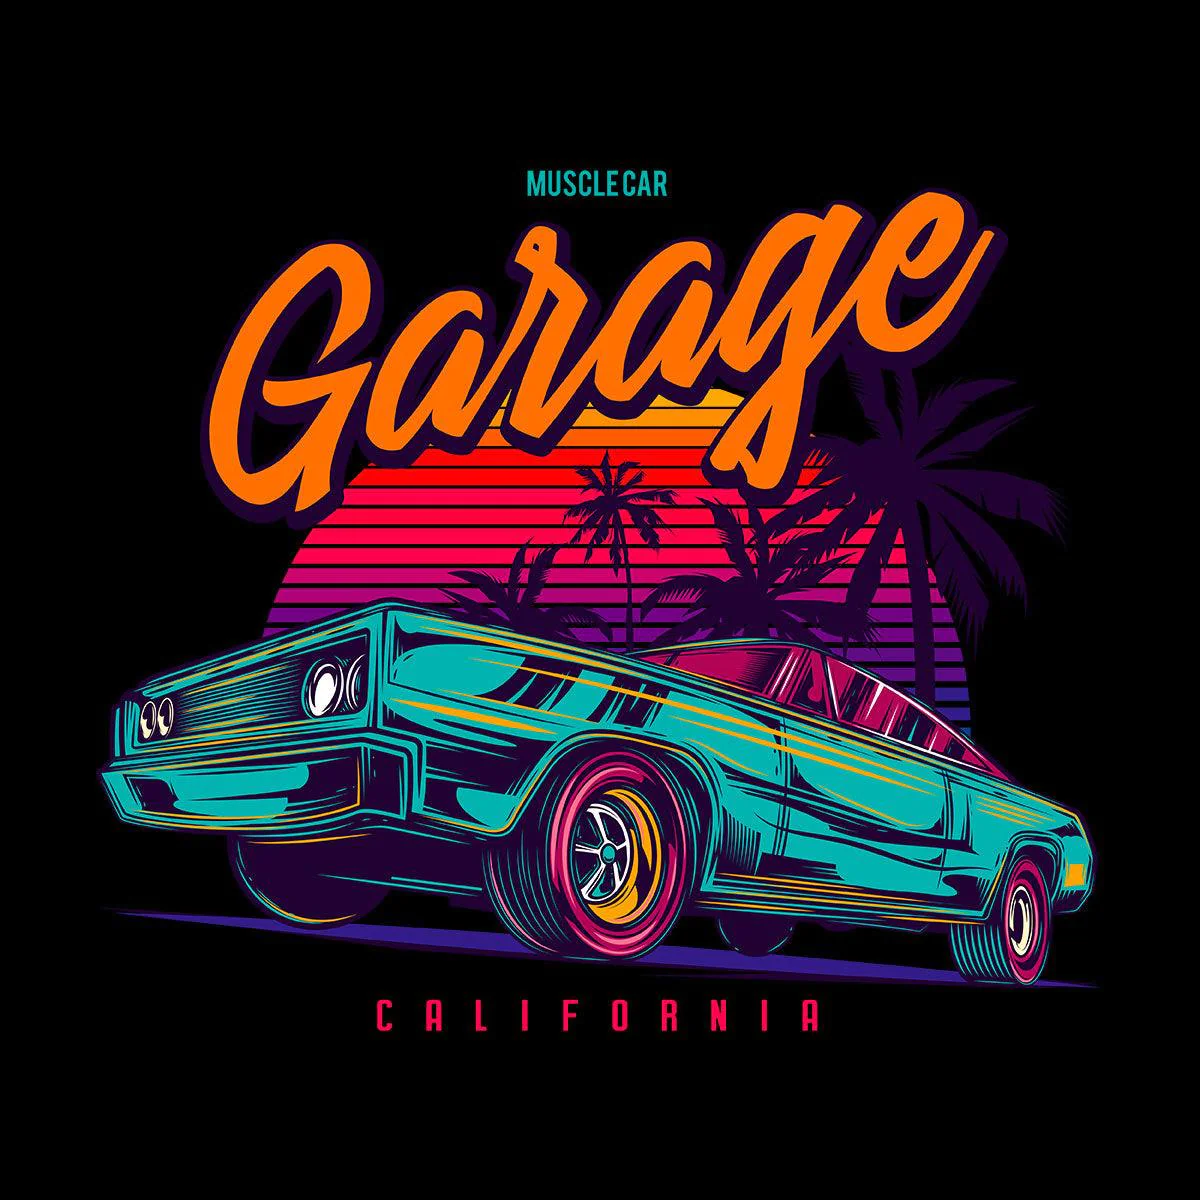 An American muscle car in retro neon style - Garage California